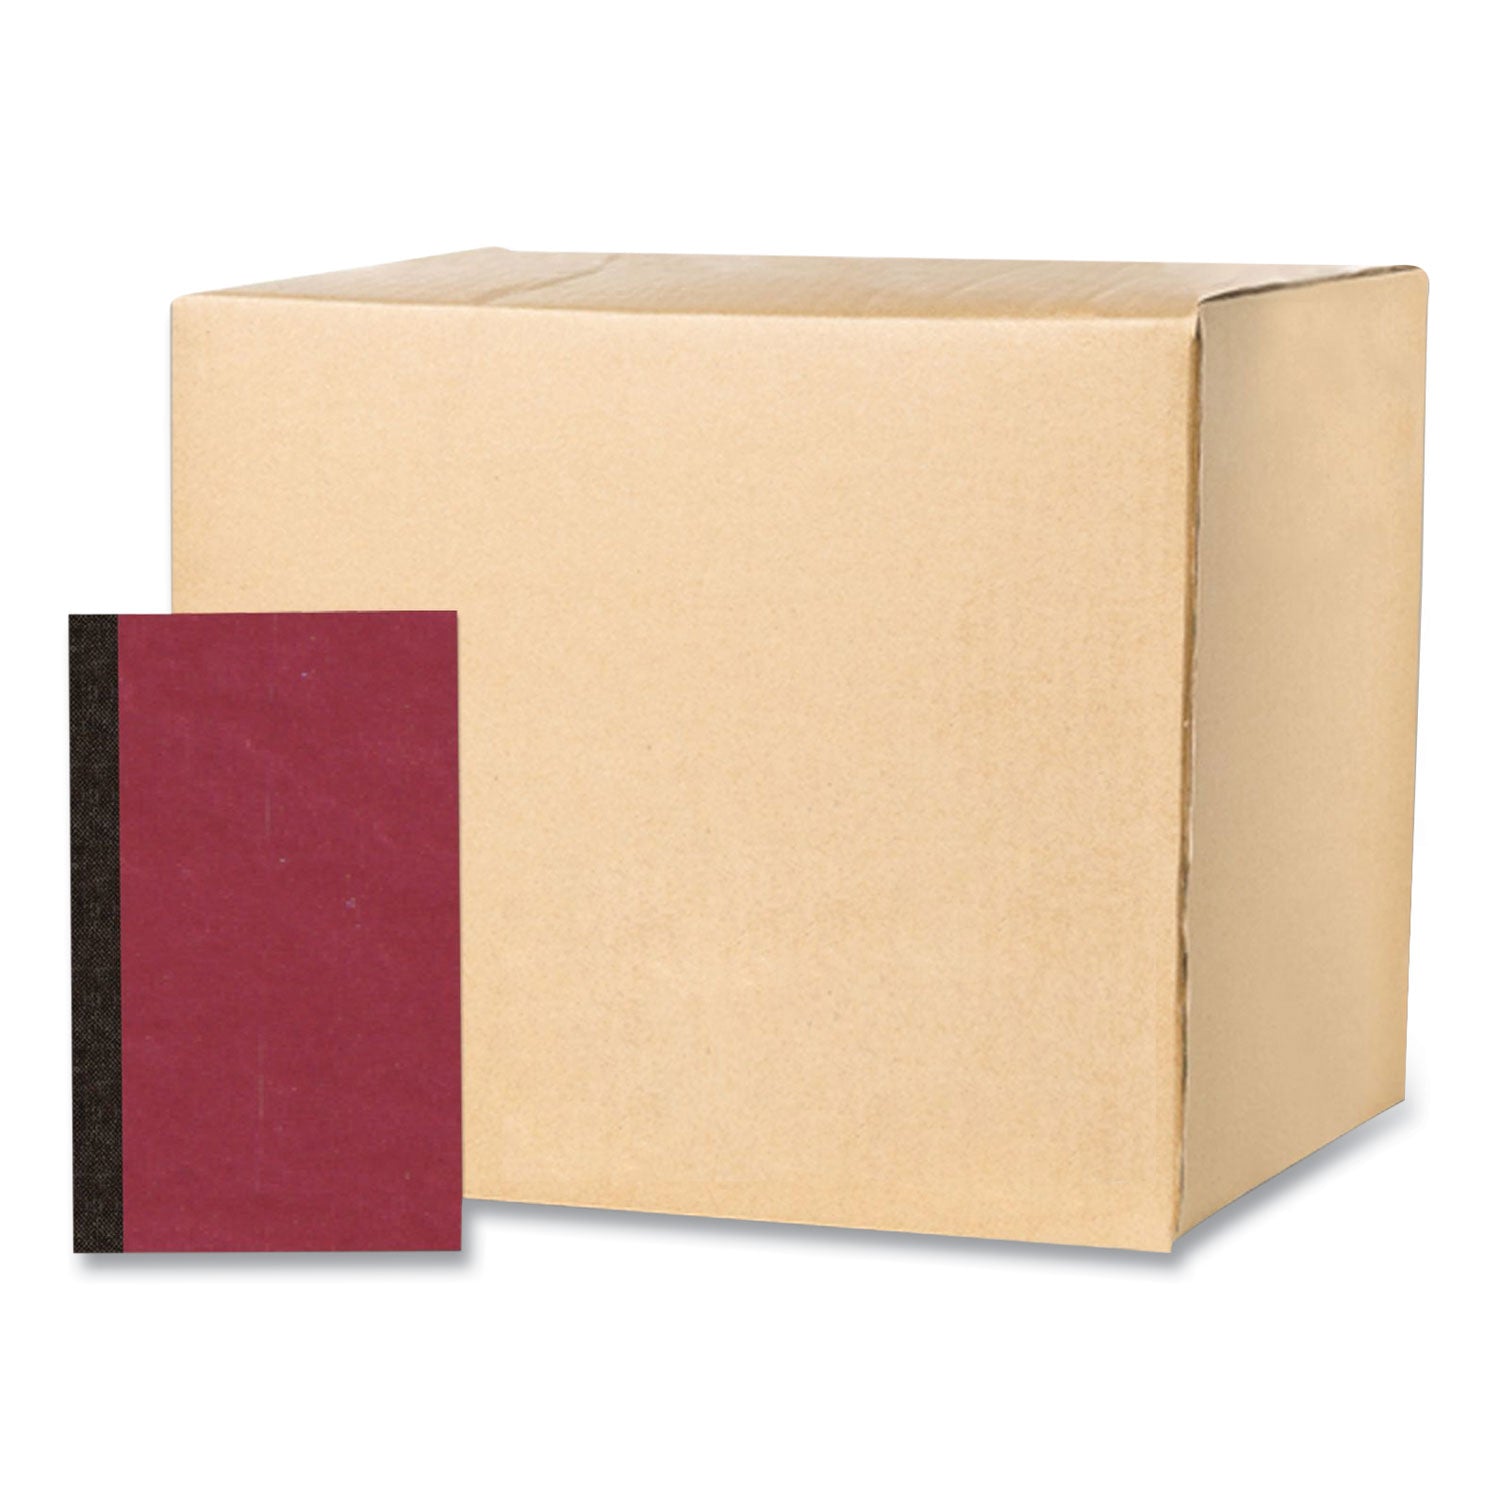 sewn-memo-book-narrow-rule-red-cover-70-6-x-375-sheets-144-carton-ships-in-4-6-business-days_roa76096cs - 1